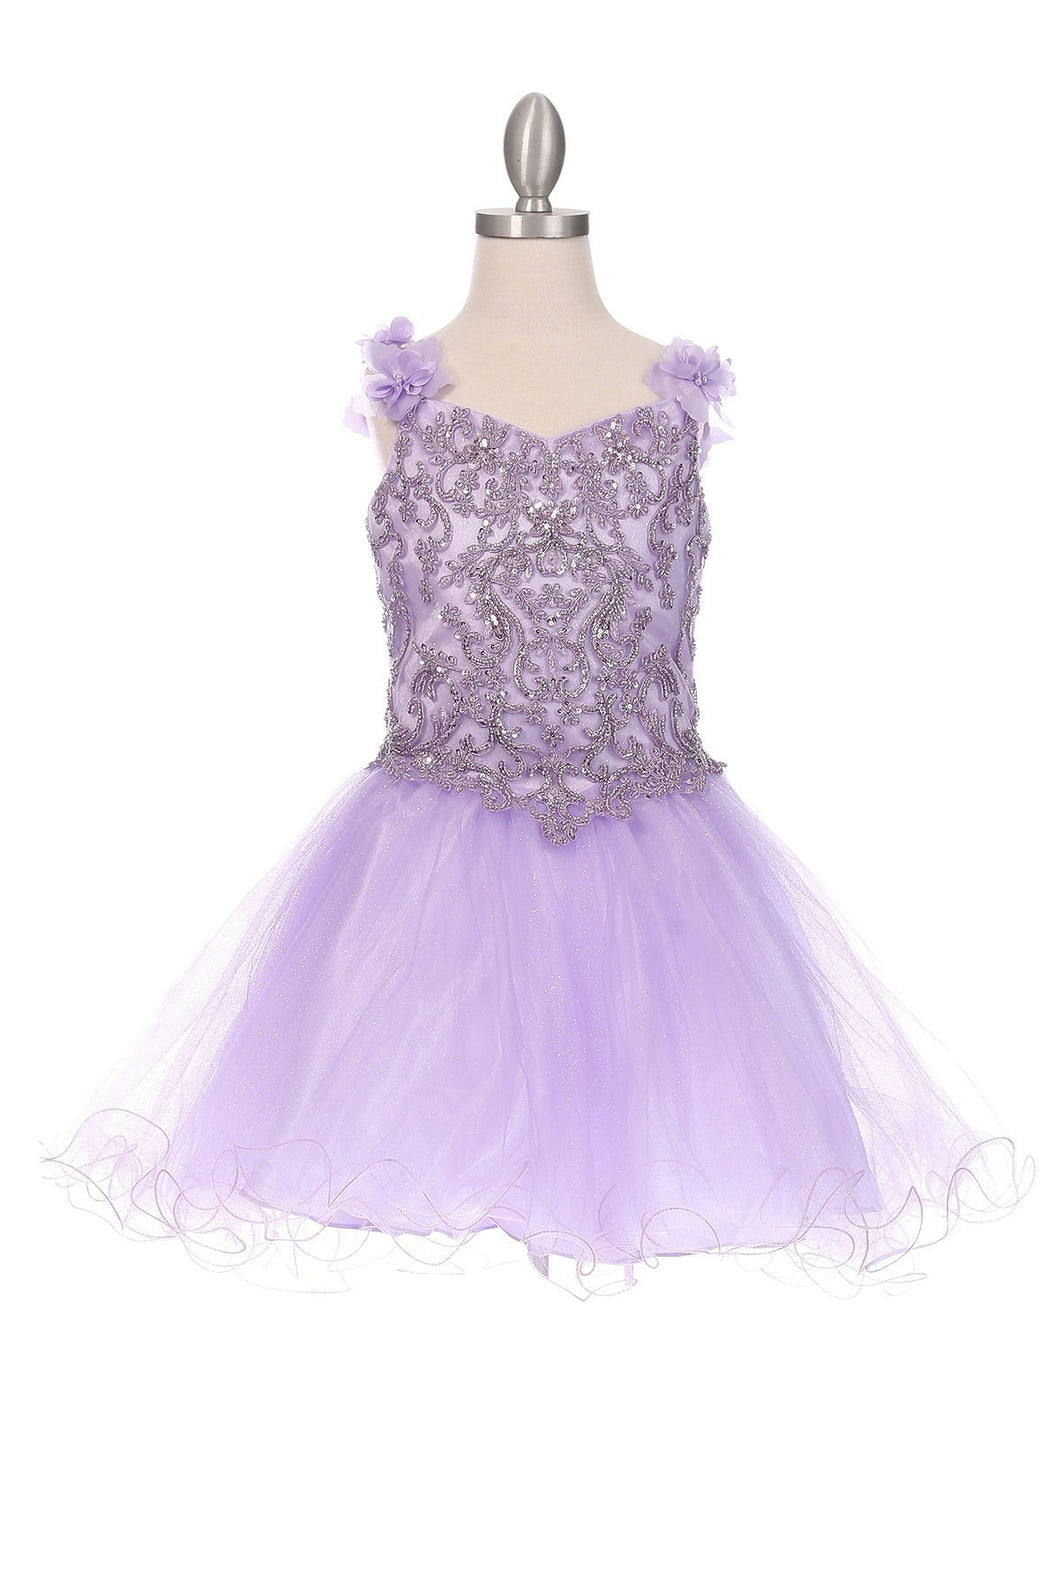 Cinderella Couture #5130